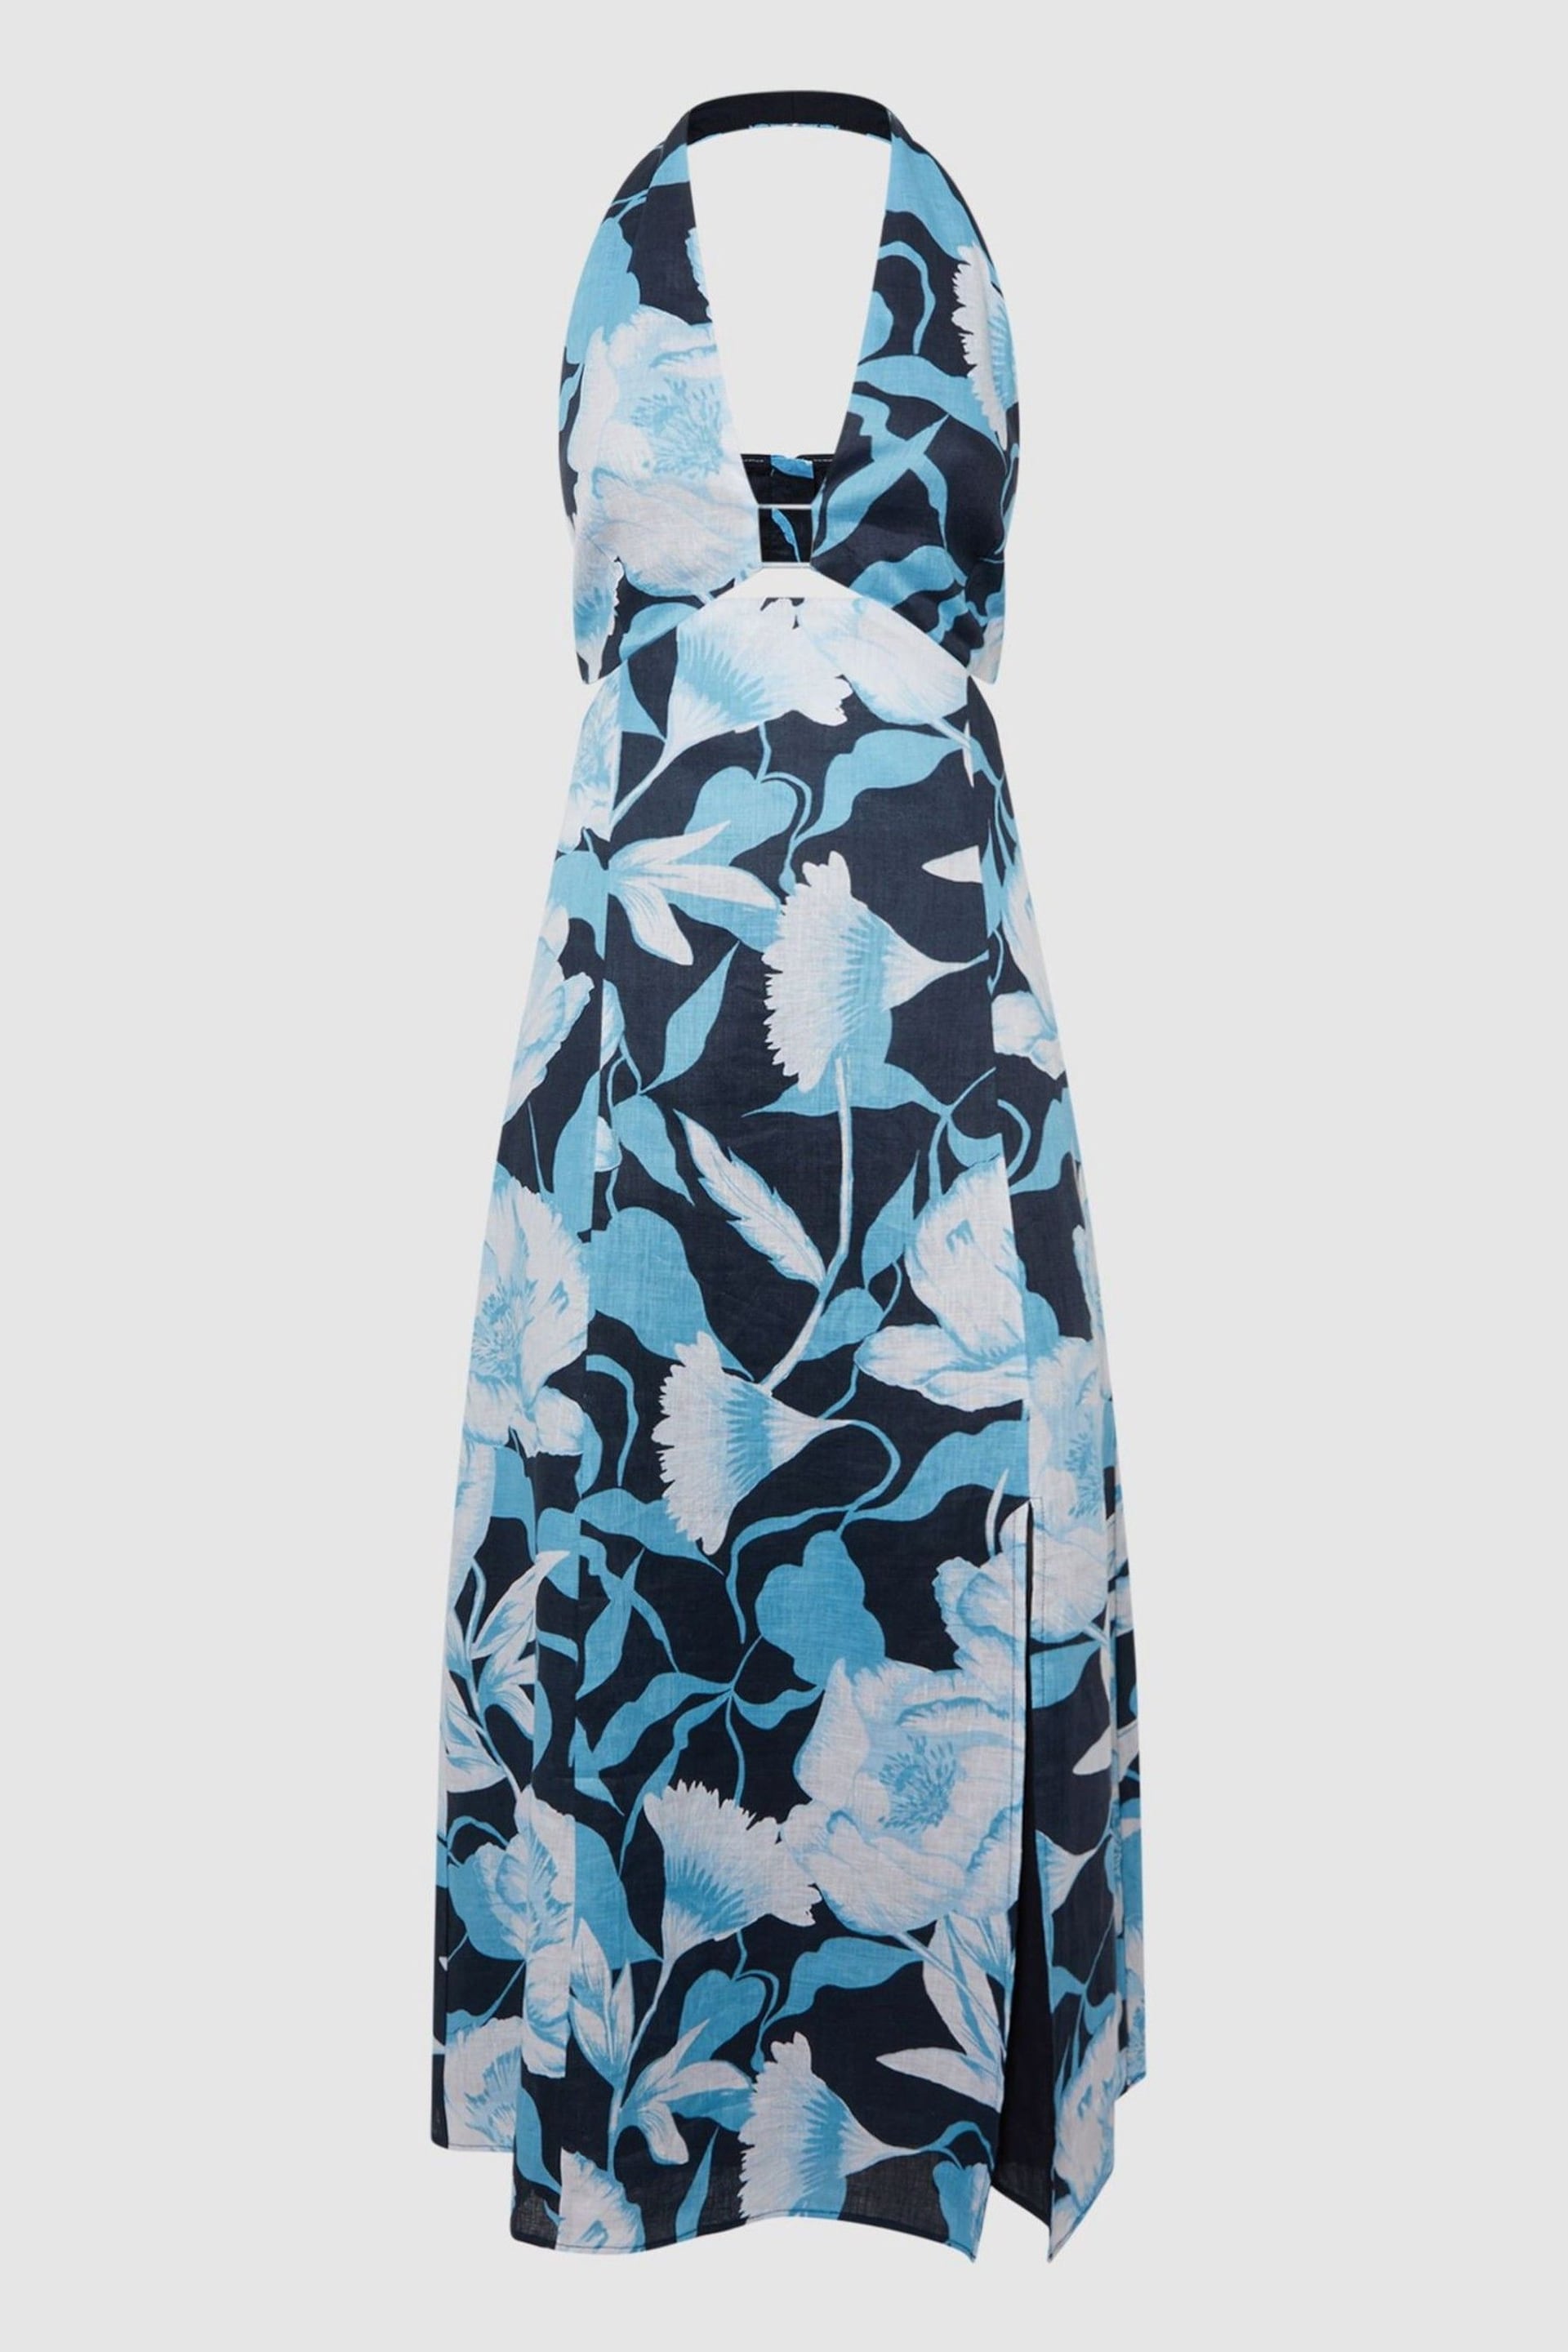 Reiss Navy/Blue Kaia Linen Halter Neck Midi Dress - Image 2 of 5